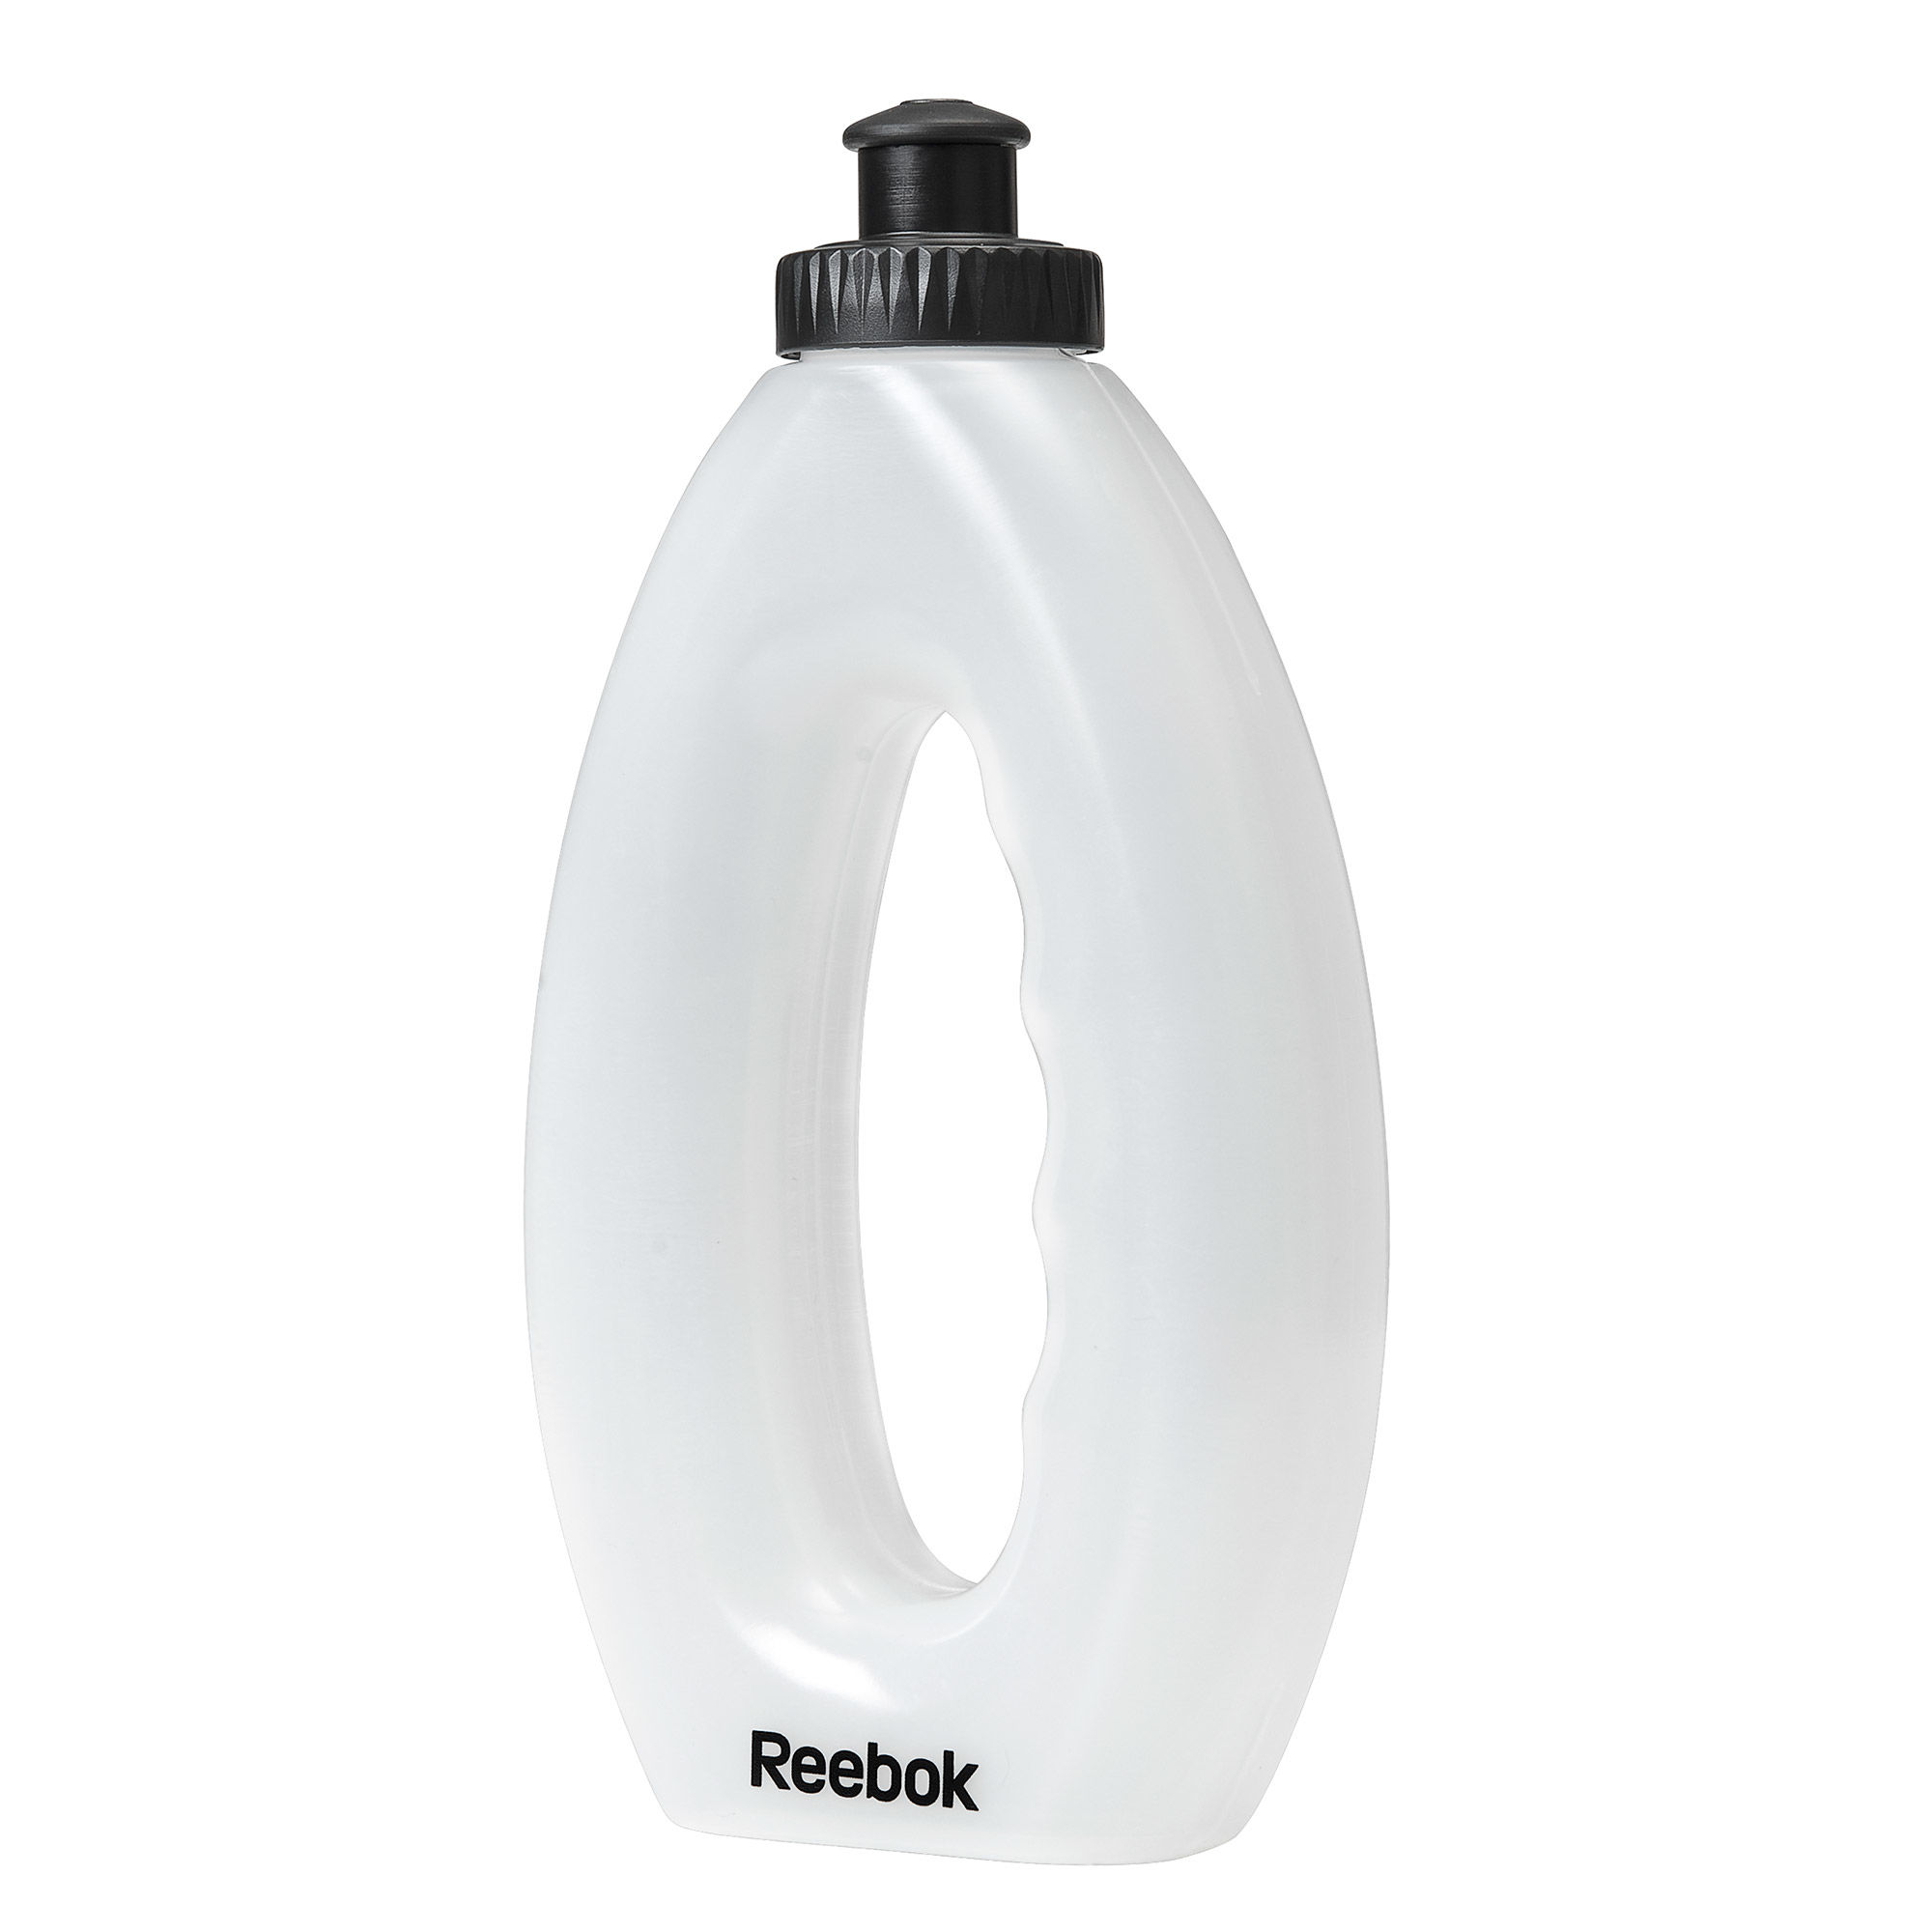 Reebok Running Water Bottle - White | Reebok MLT